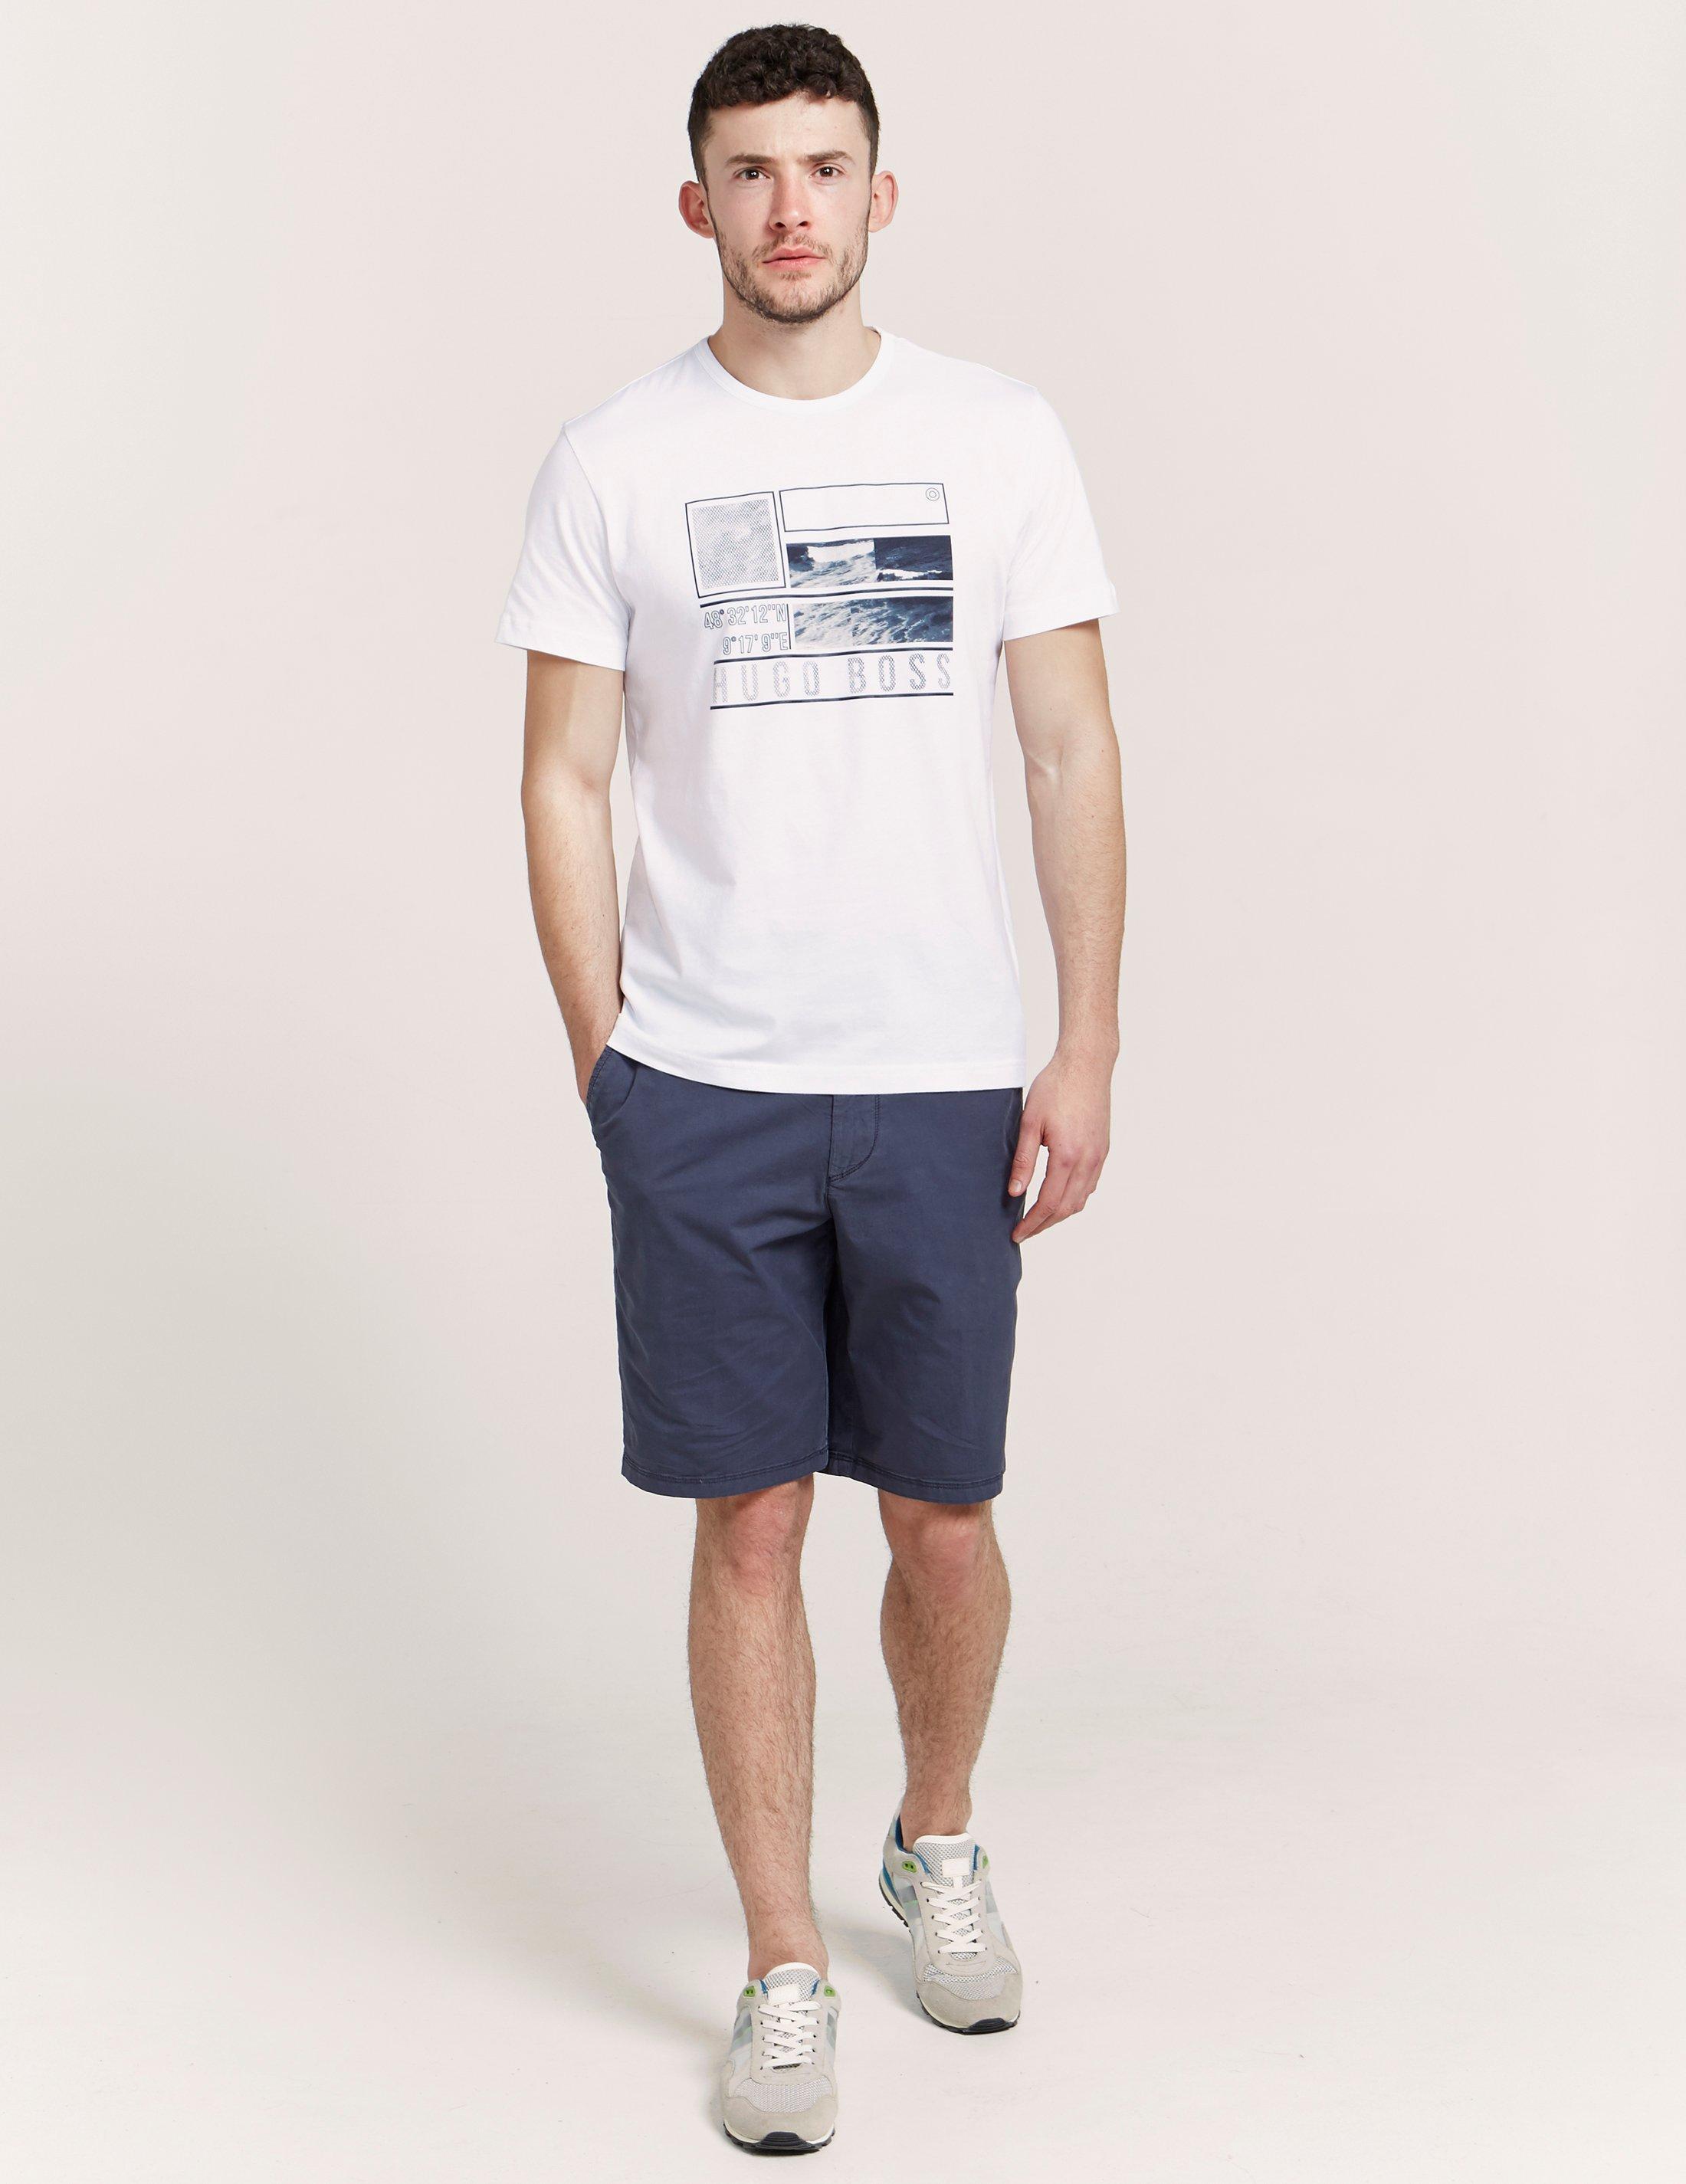 BOSS by HUGO BOSS Cotton Green Square Print Short Sleeve T-shirt in White  for Men | Lyst